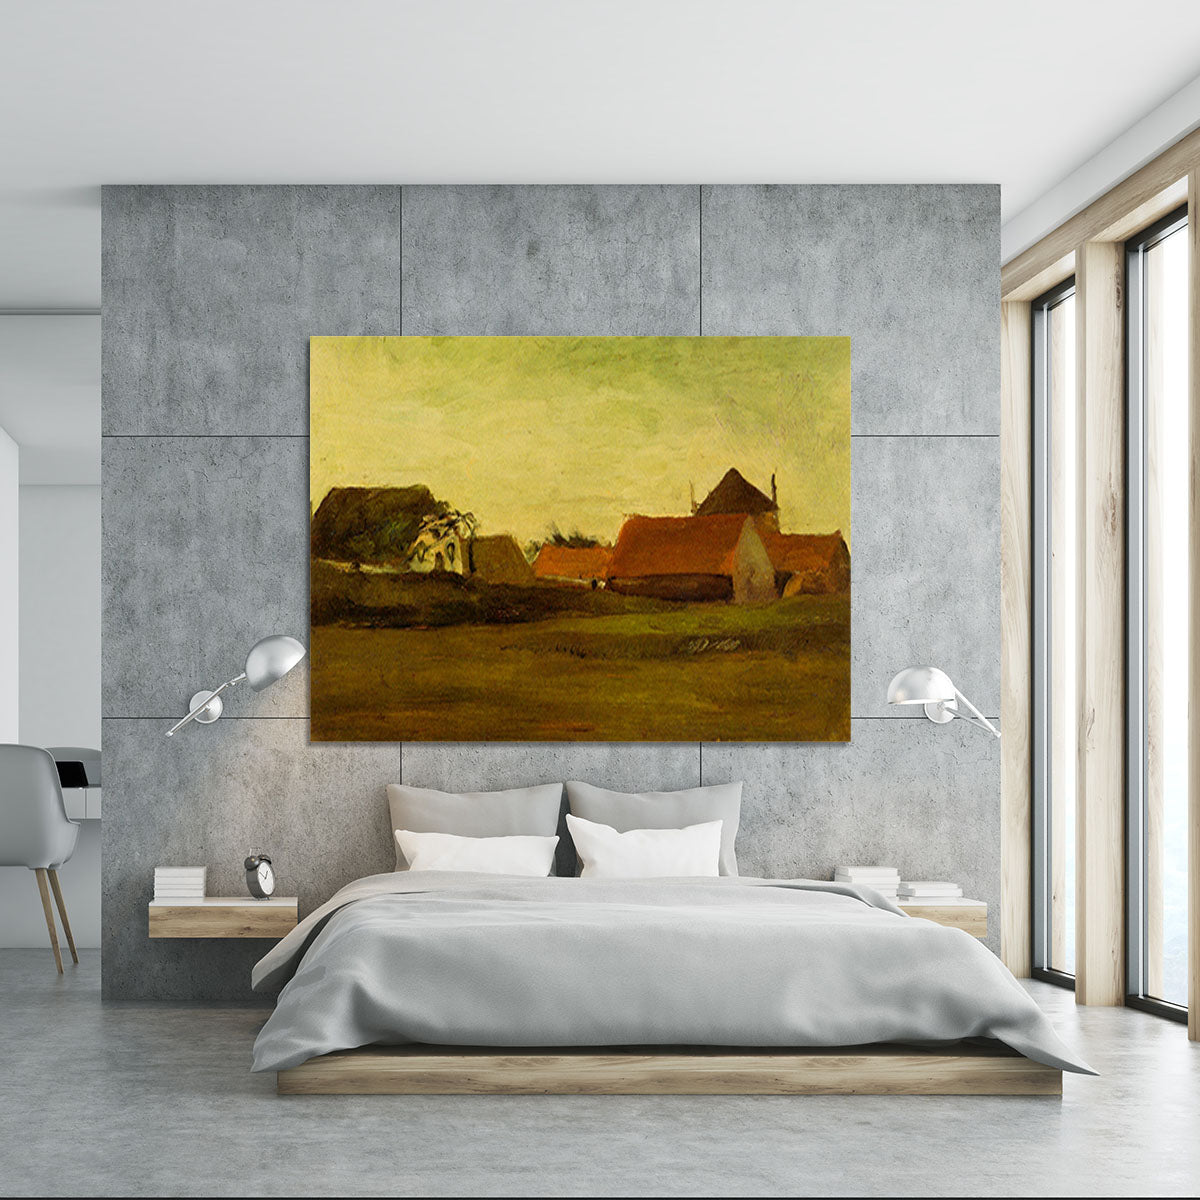 Farmhouses in Loosduinen near The Hague at Twilight by Van Gogh Canvas Print or Poster - Canvas Art Rocks - 5